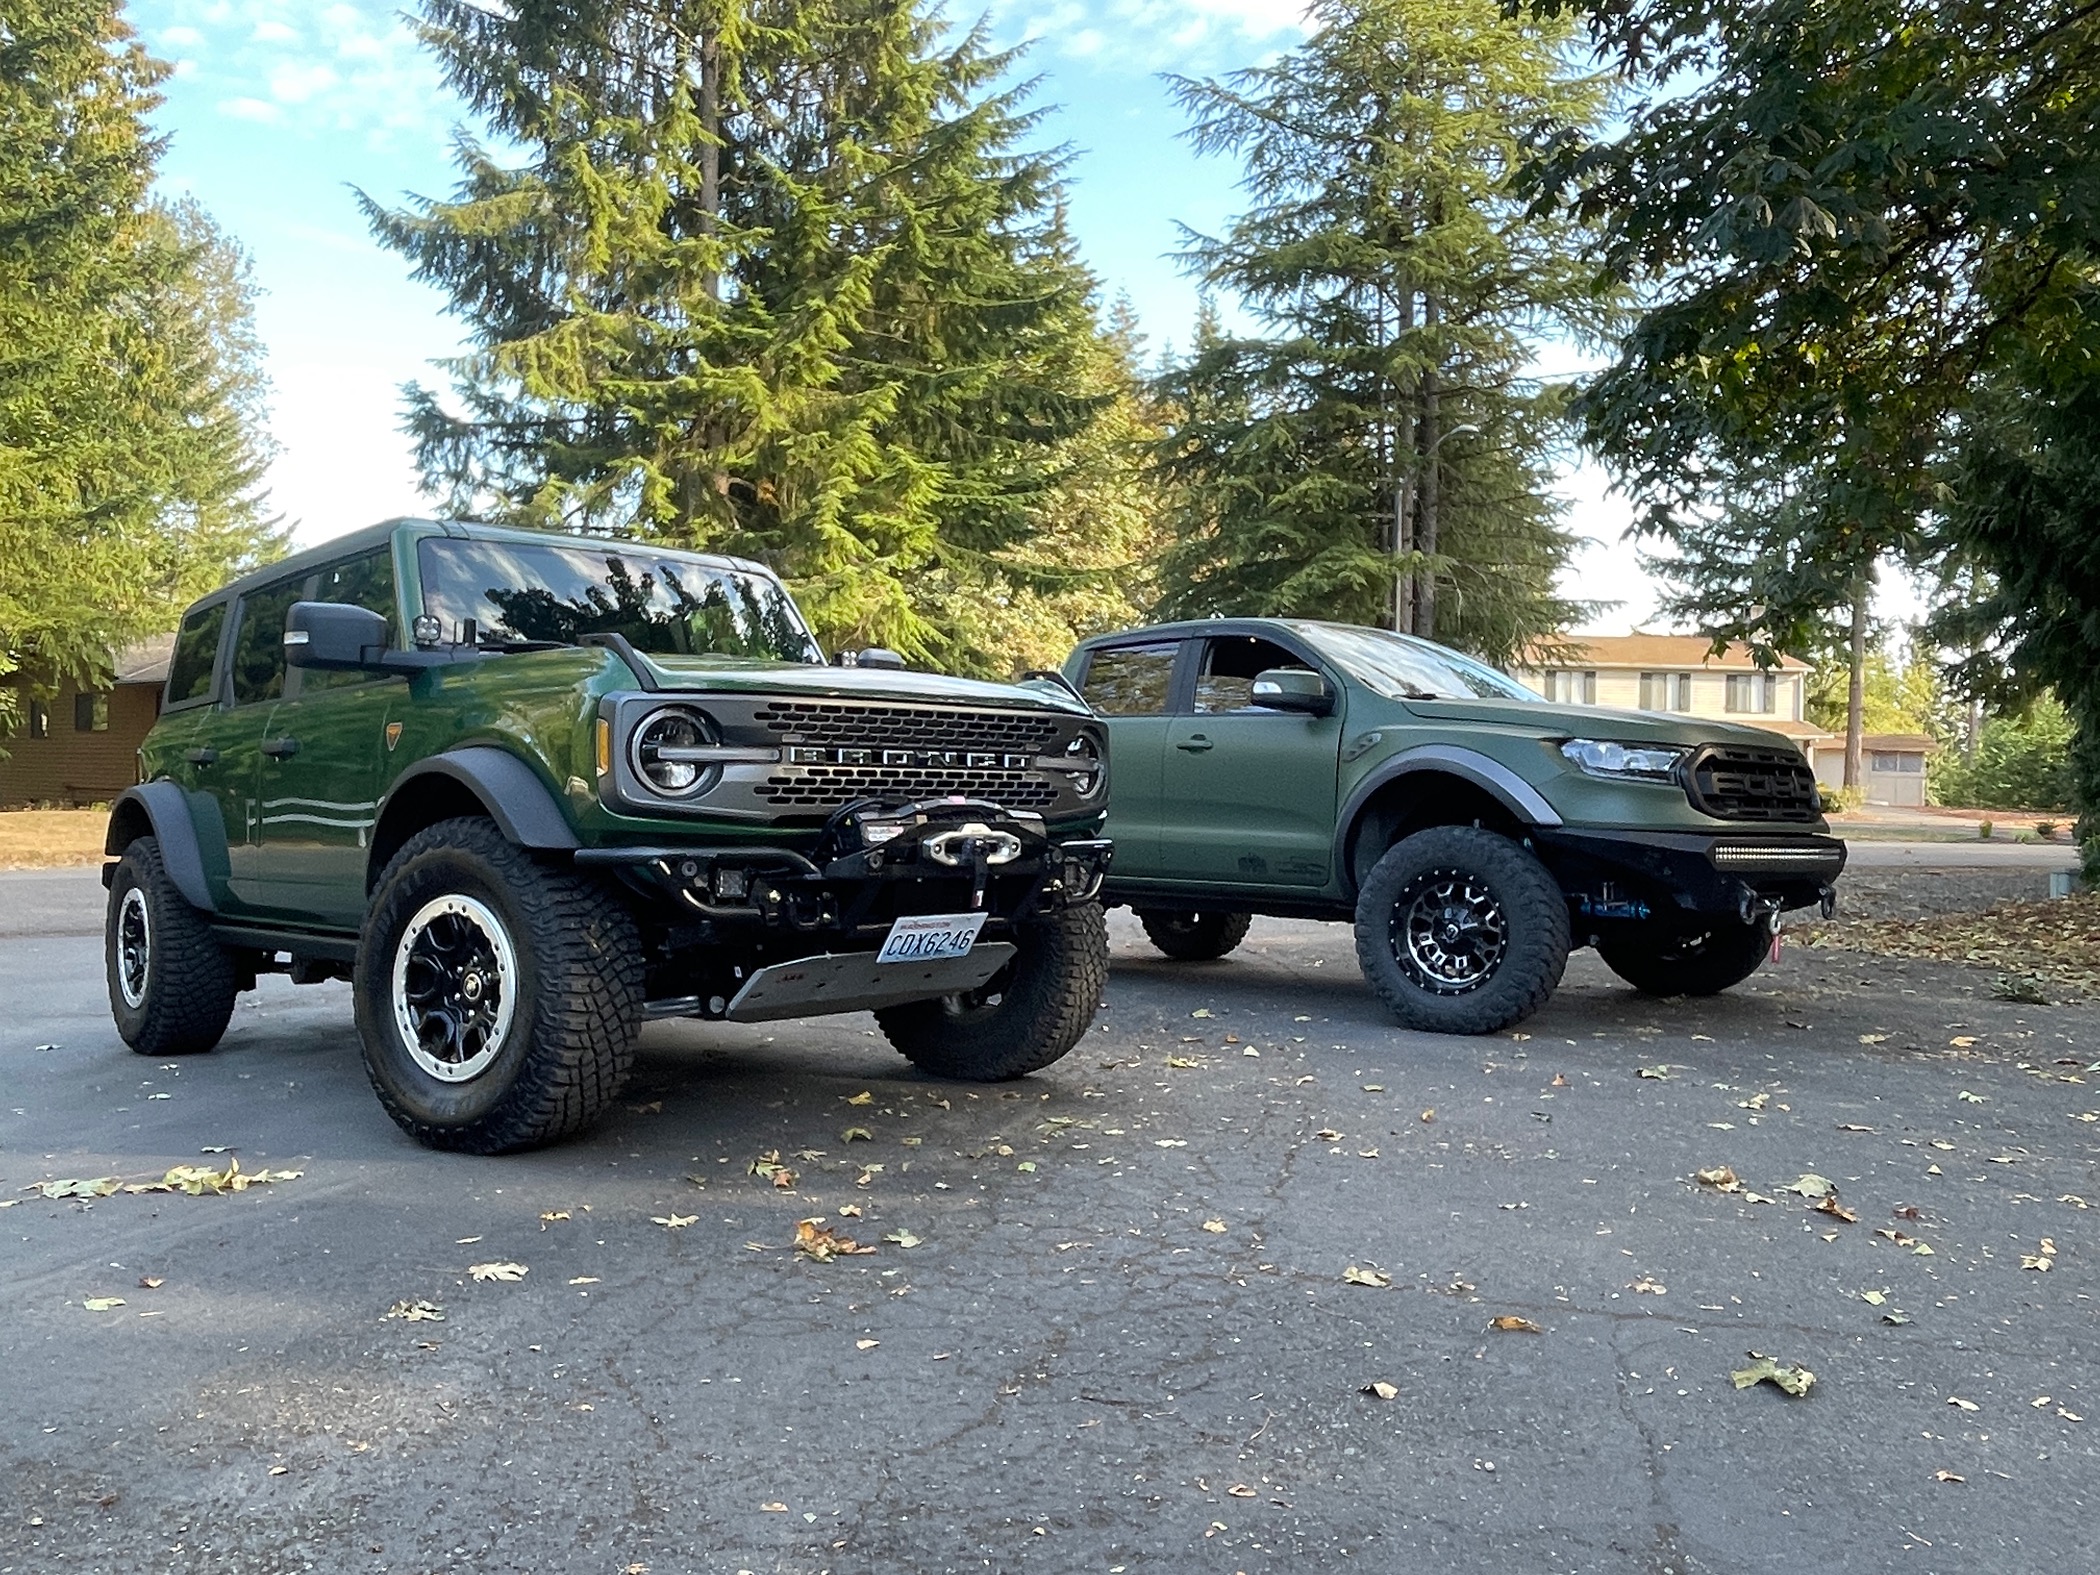 Ford Bronco ARB UVP/Skid Plates Opinion IMG_1244